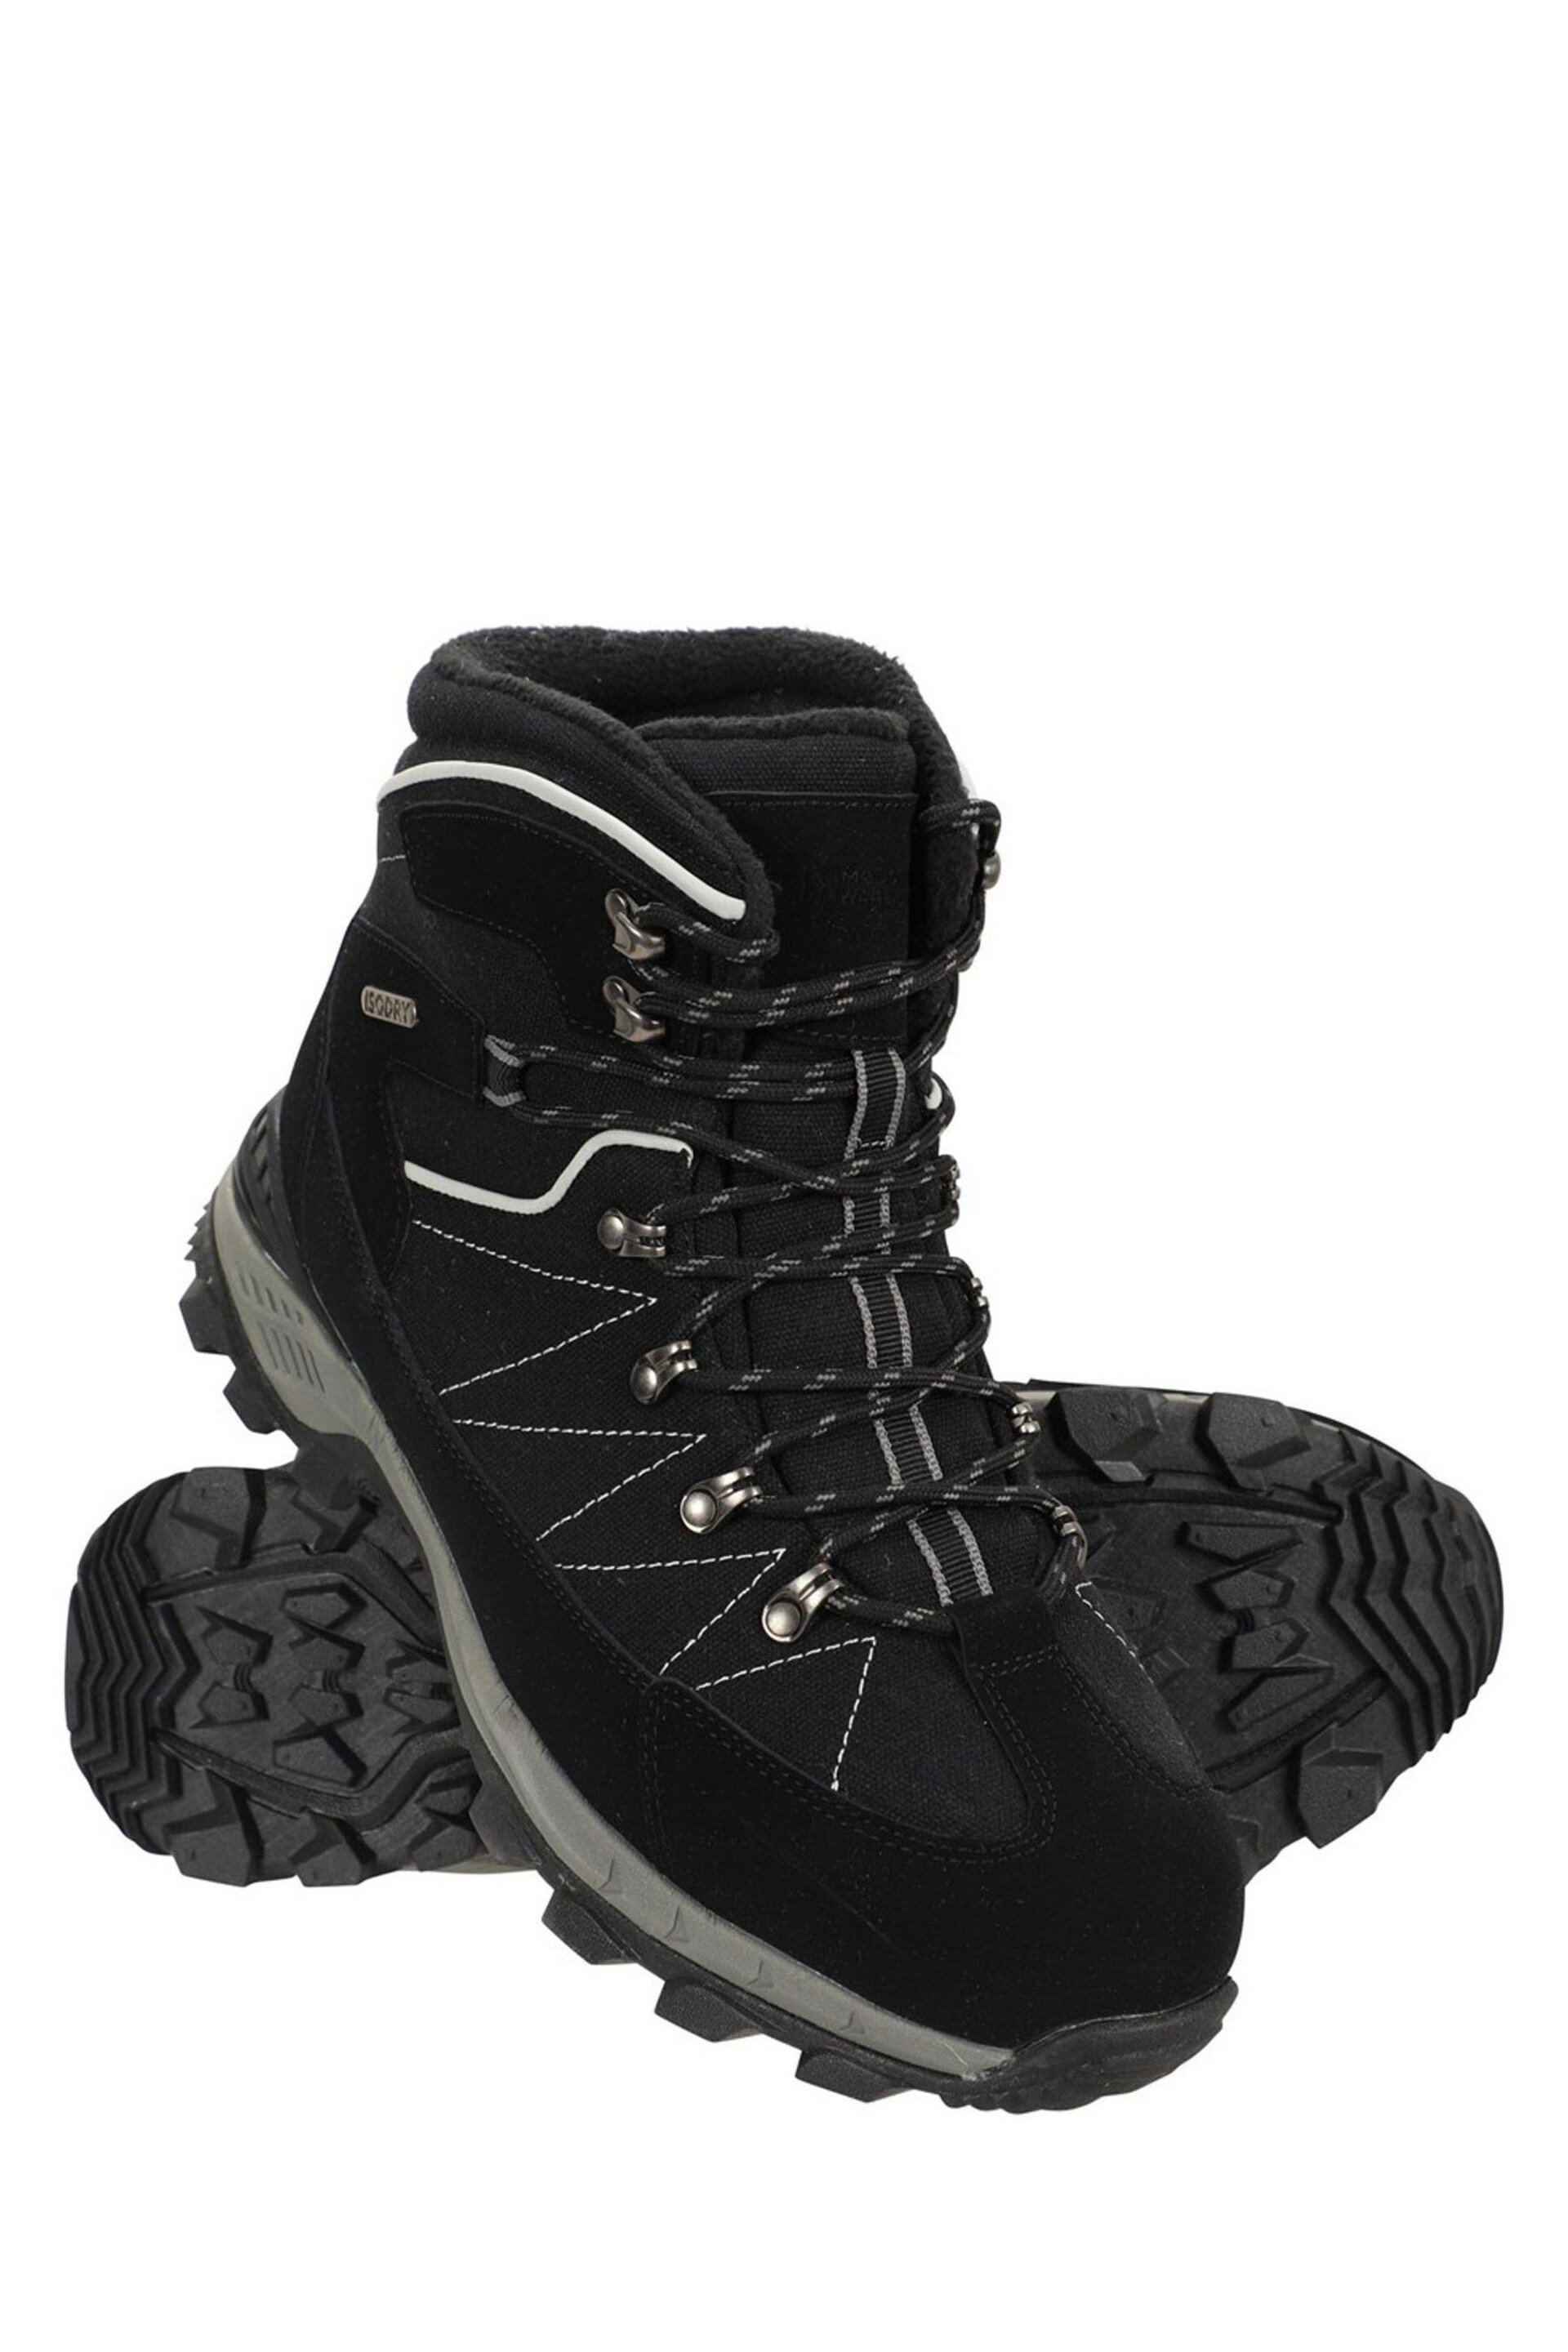 Mountain Warehouse Grey Boulder Winter Trekker Waterproof Boots - Image 1 of 2